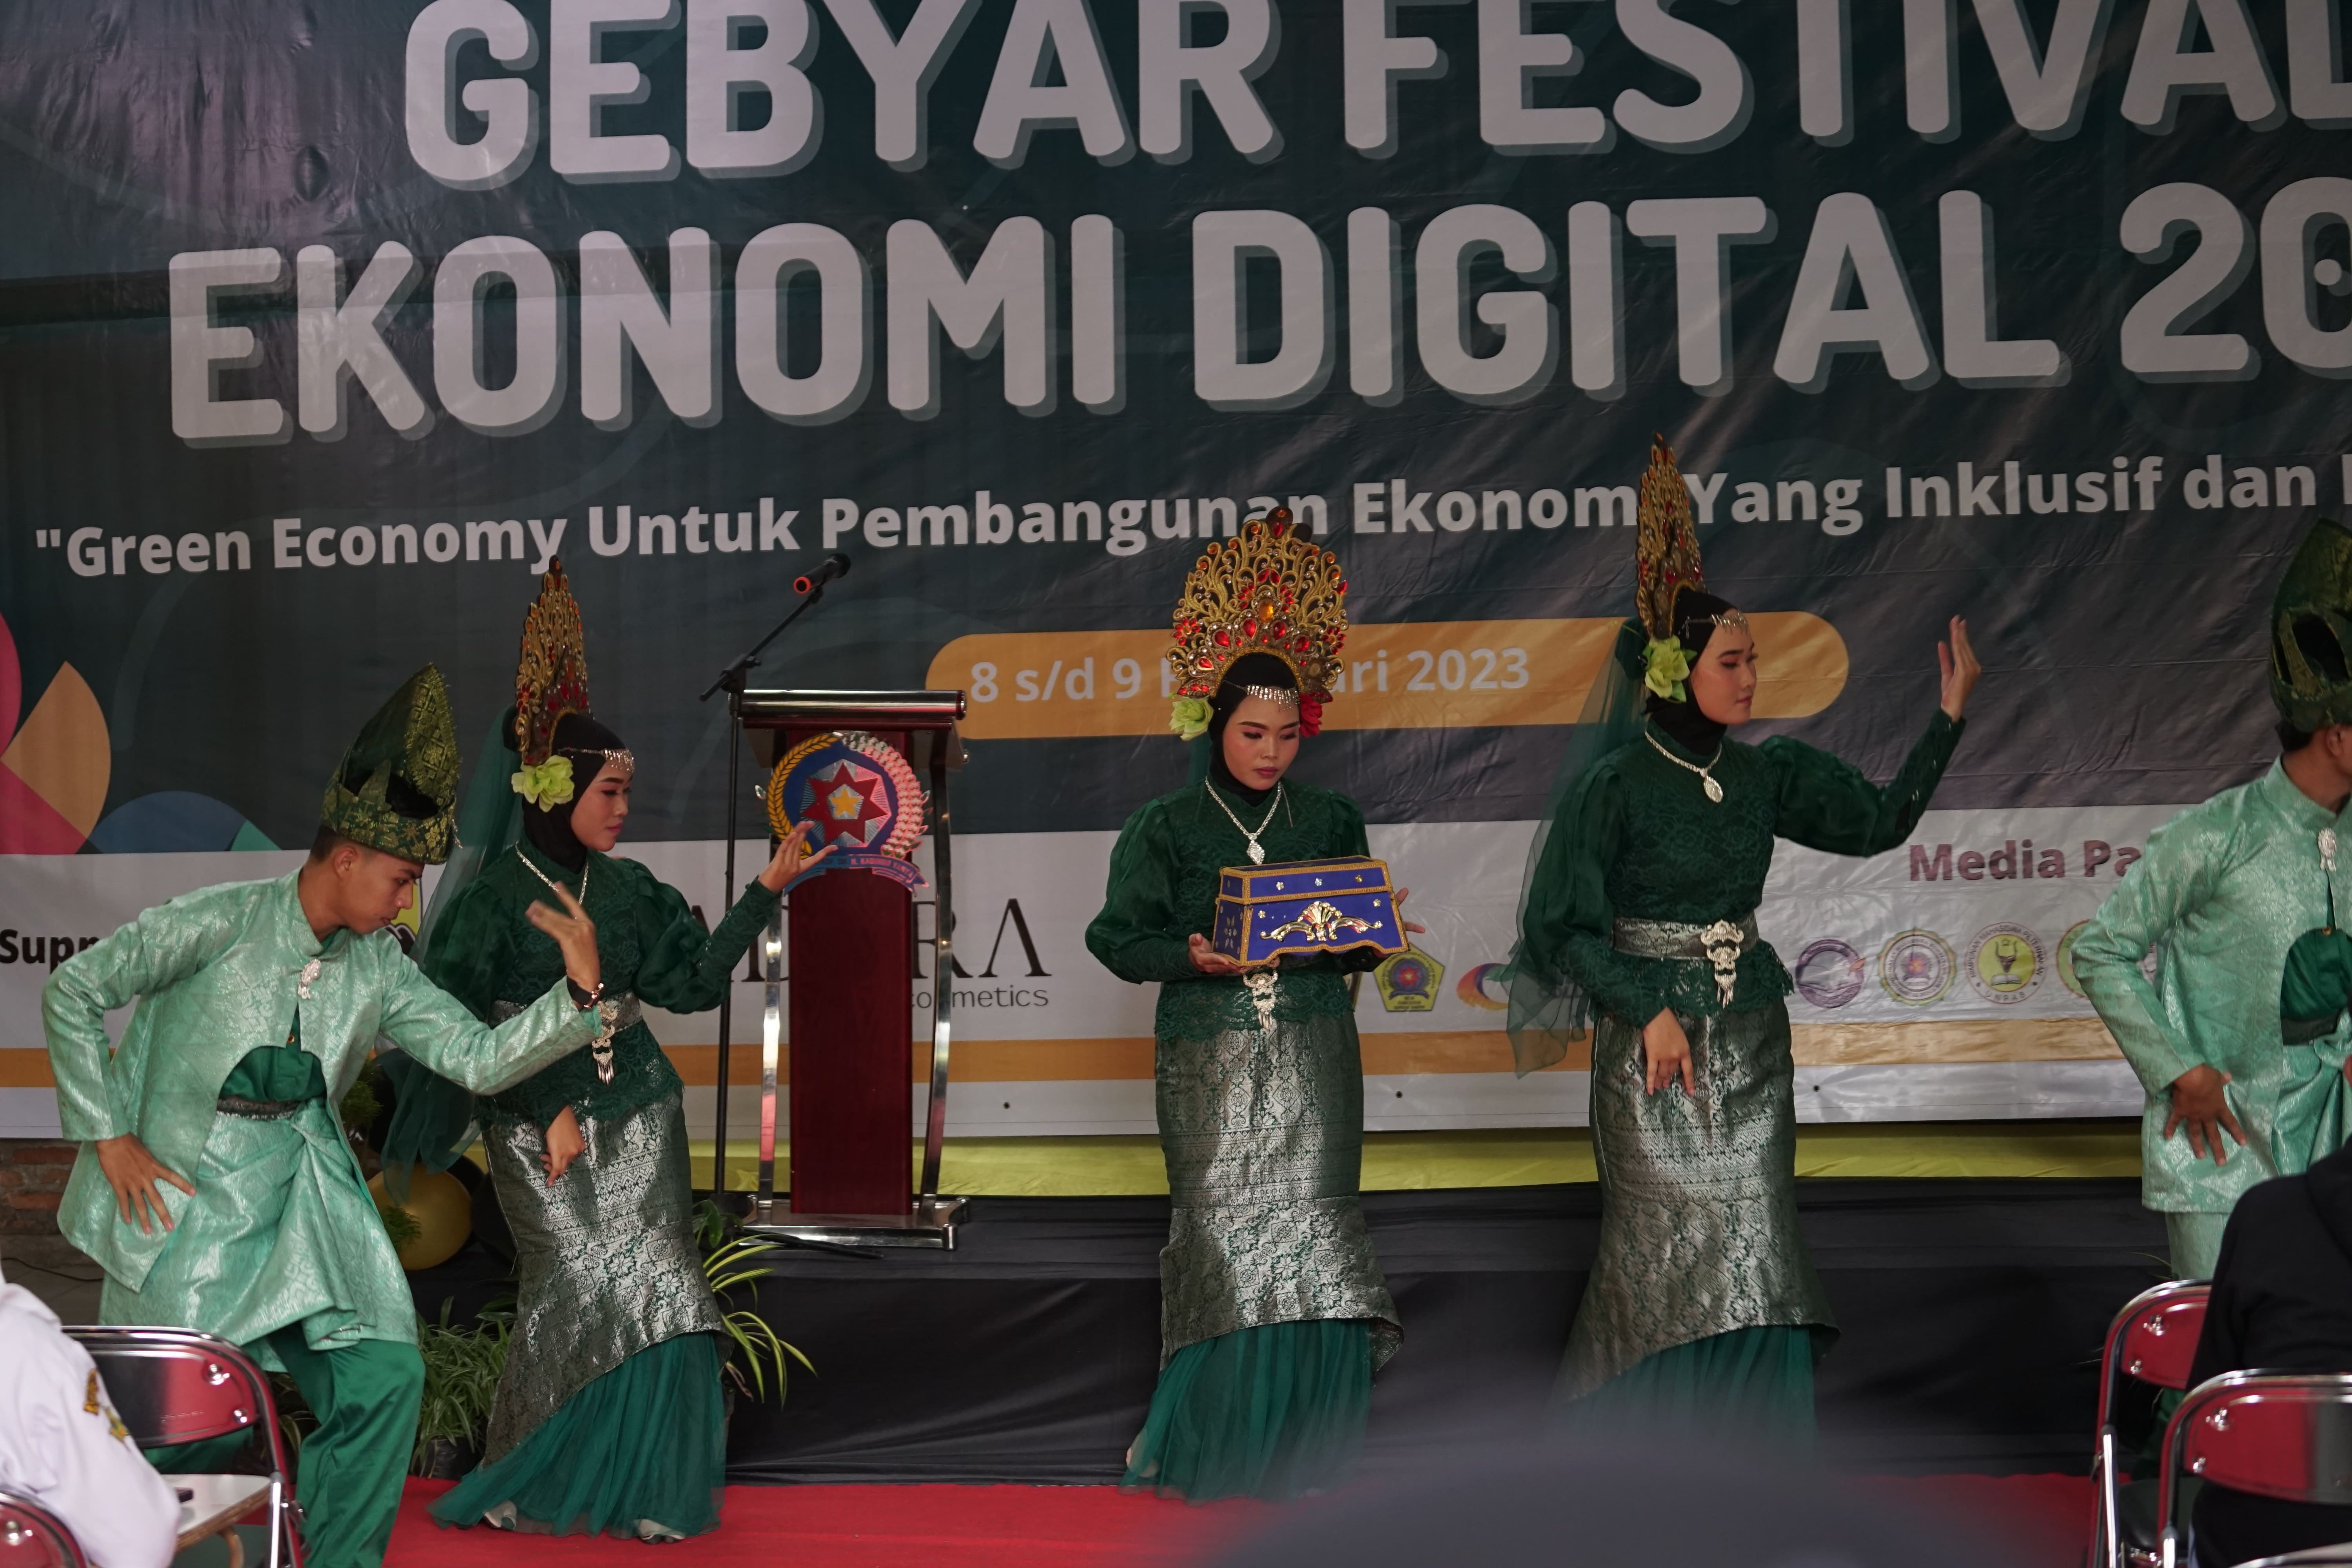 unpab-wujudkan-green-economy-melalui-gebyar-festival-ekonomi-digital-2023_18.jpg